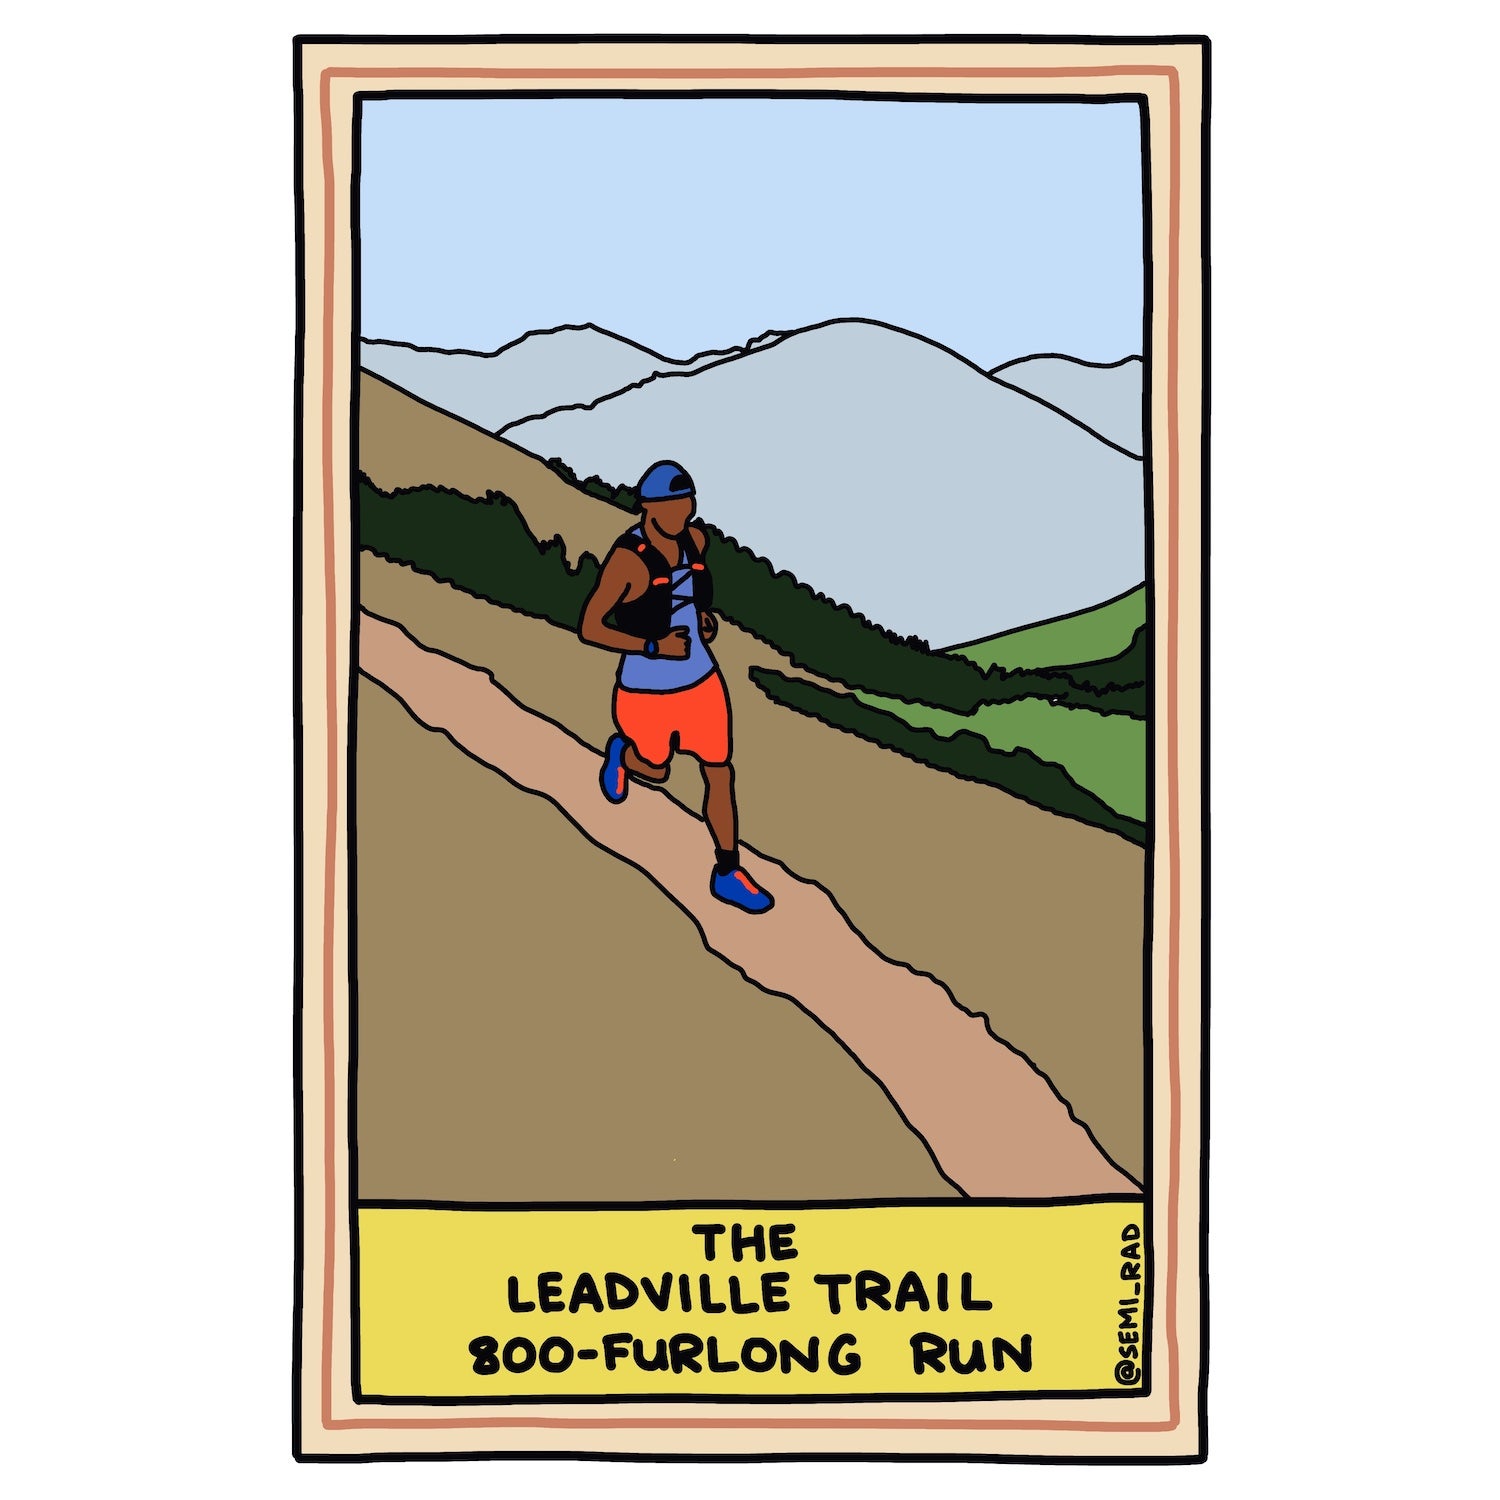 The Leadville Trail 800-Furlong Run